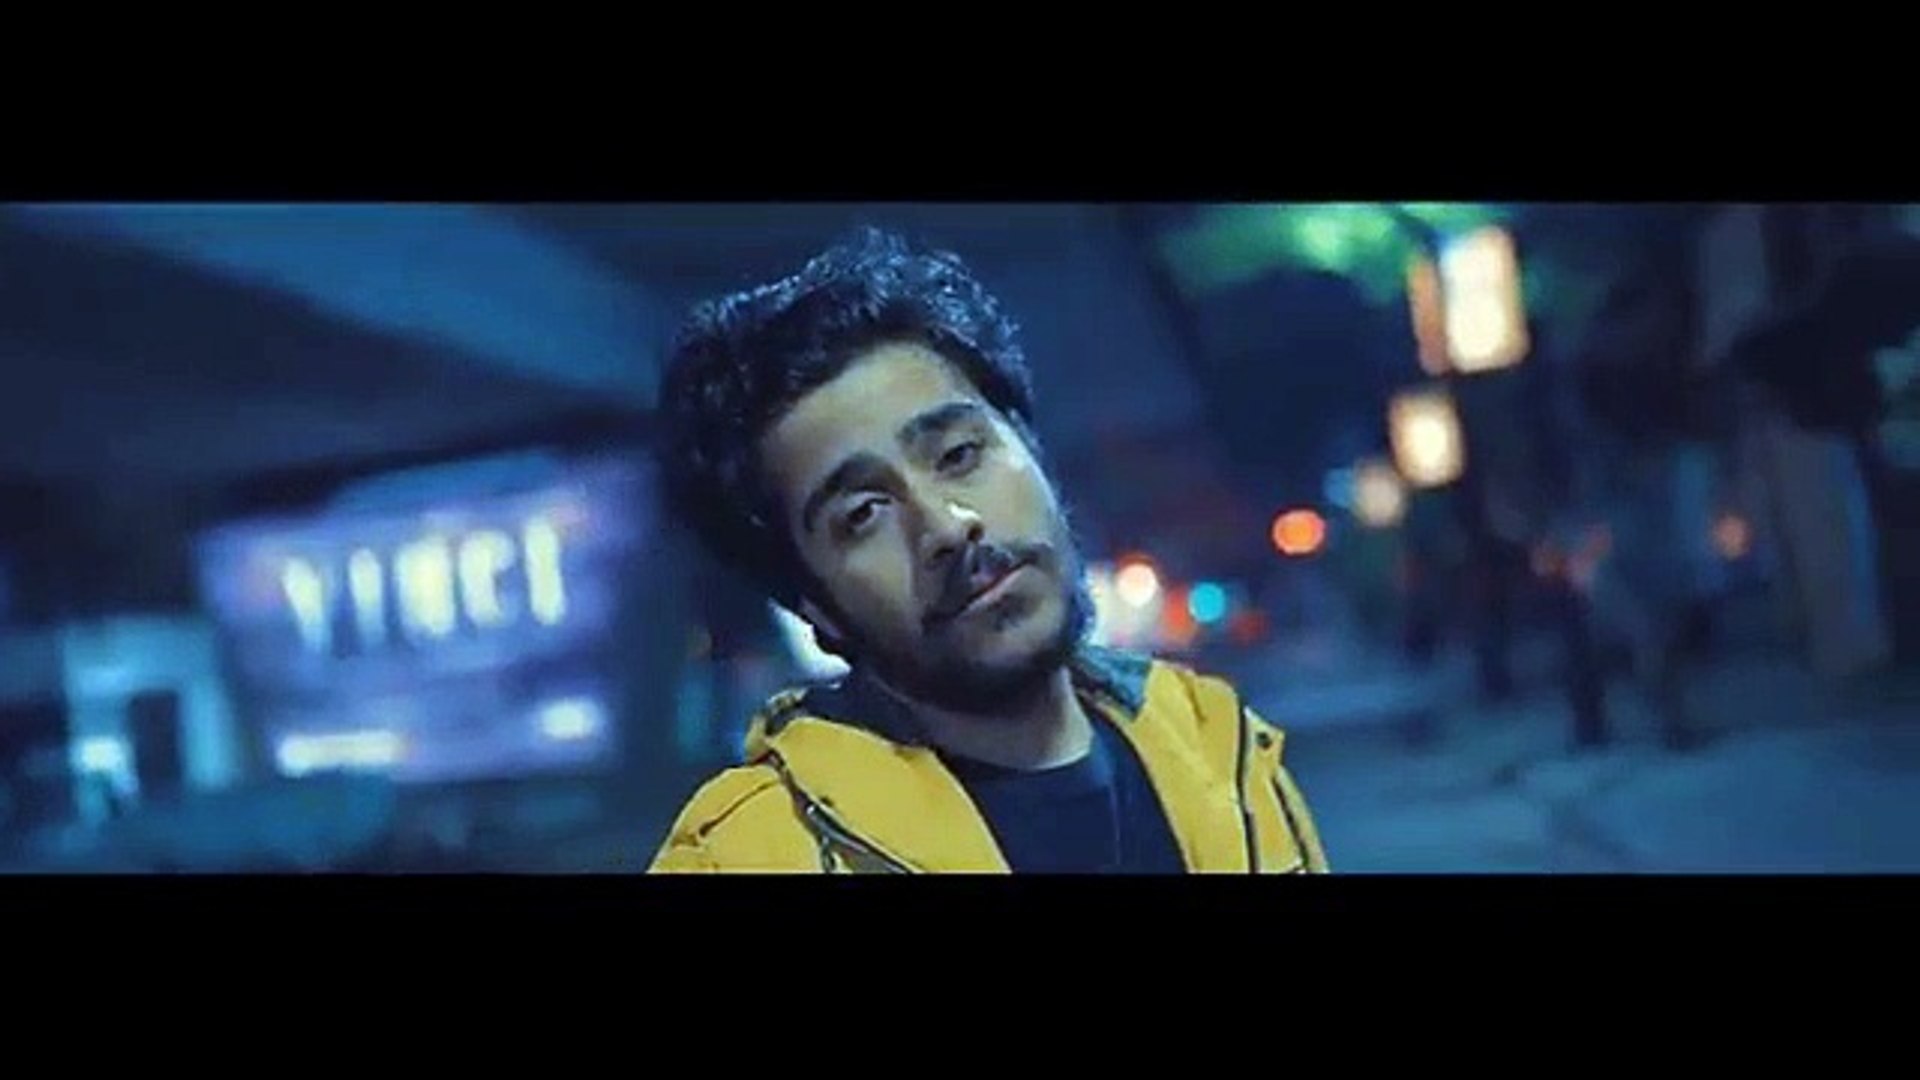 Maba'etsh Akhaf (Official Music Video) - أحمد كامل - مبقتش اخاف - الكليب الرسمي - M.MEDIA VIDEO